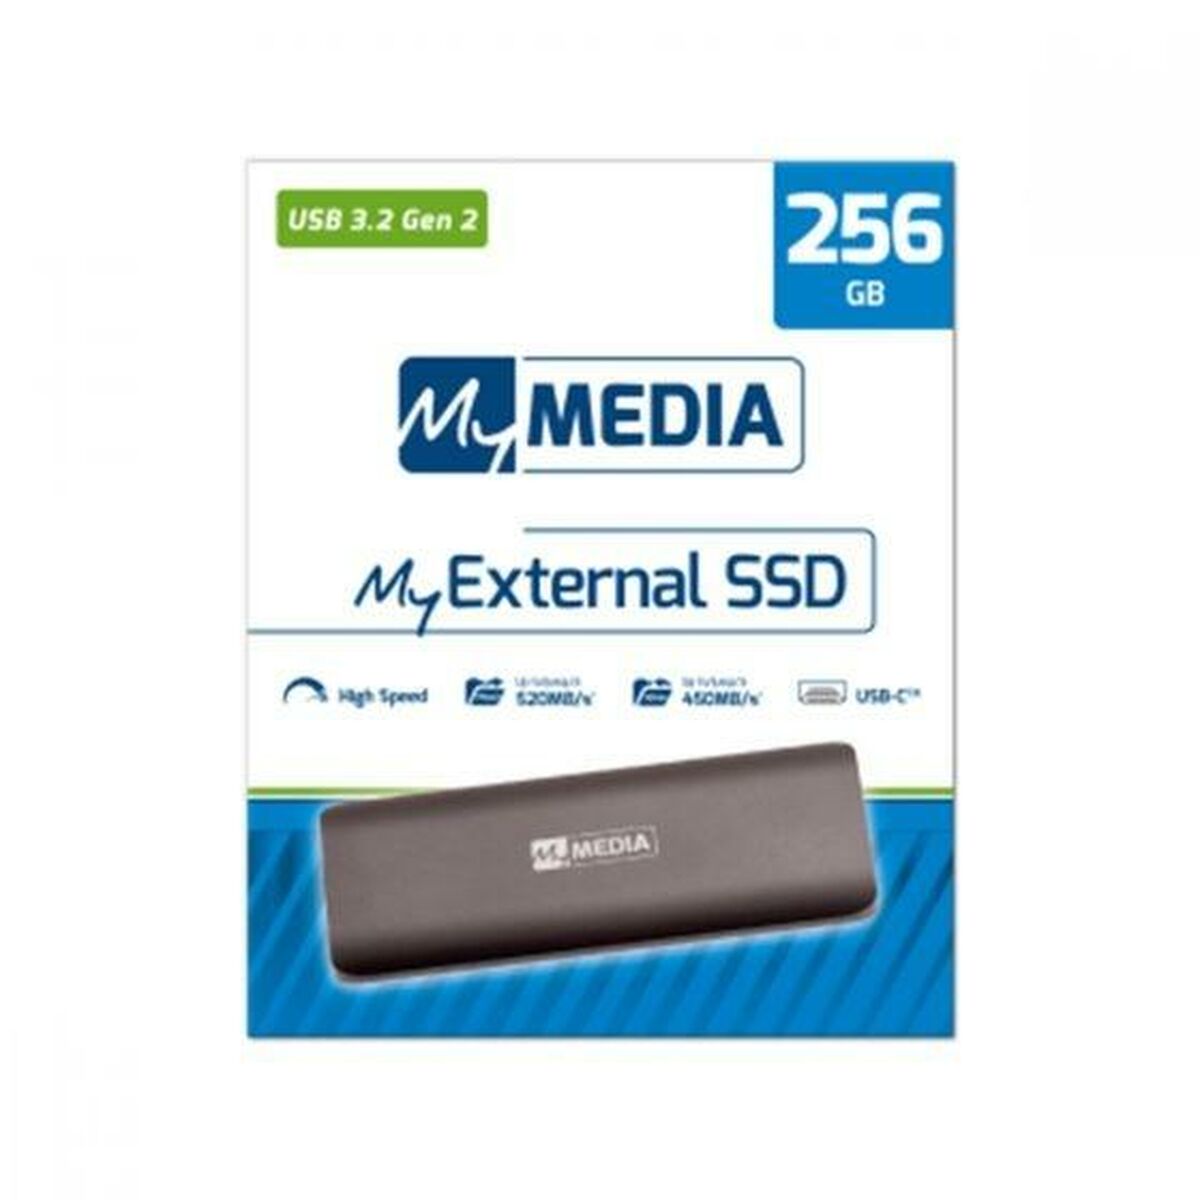 Memorie USB MyMedia 256 GB Negru